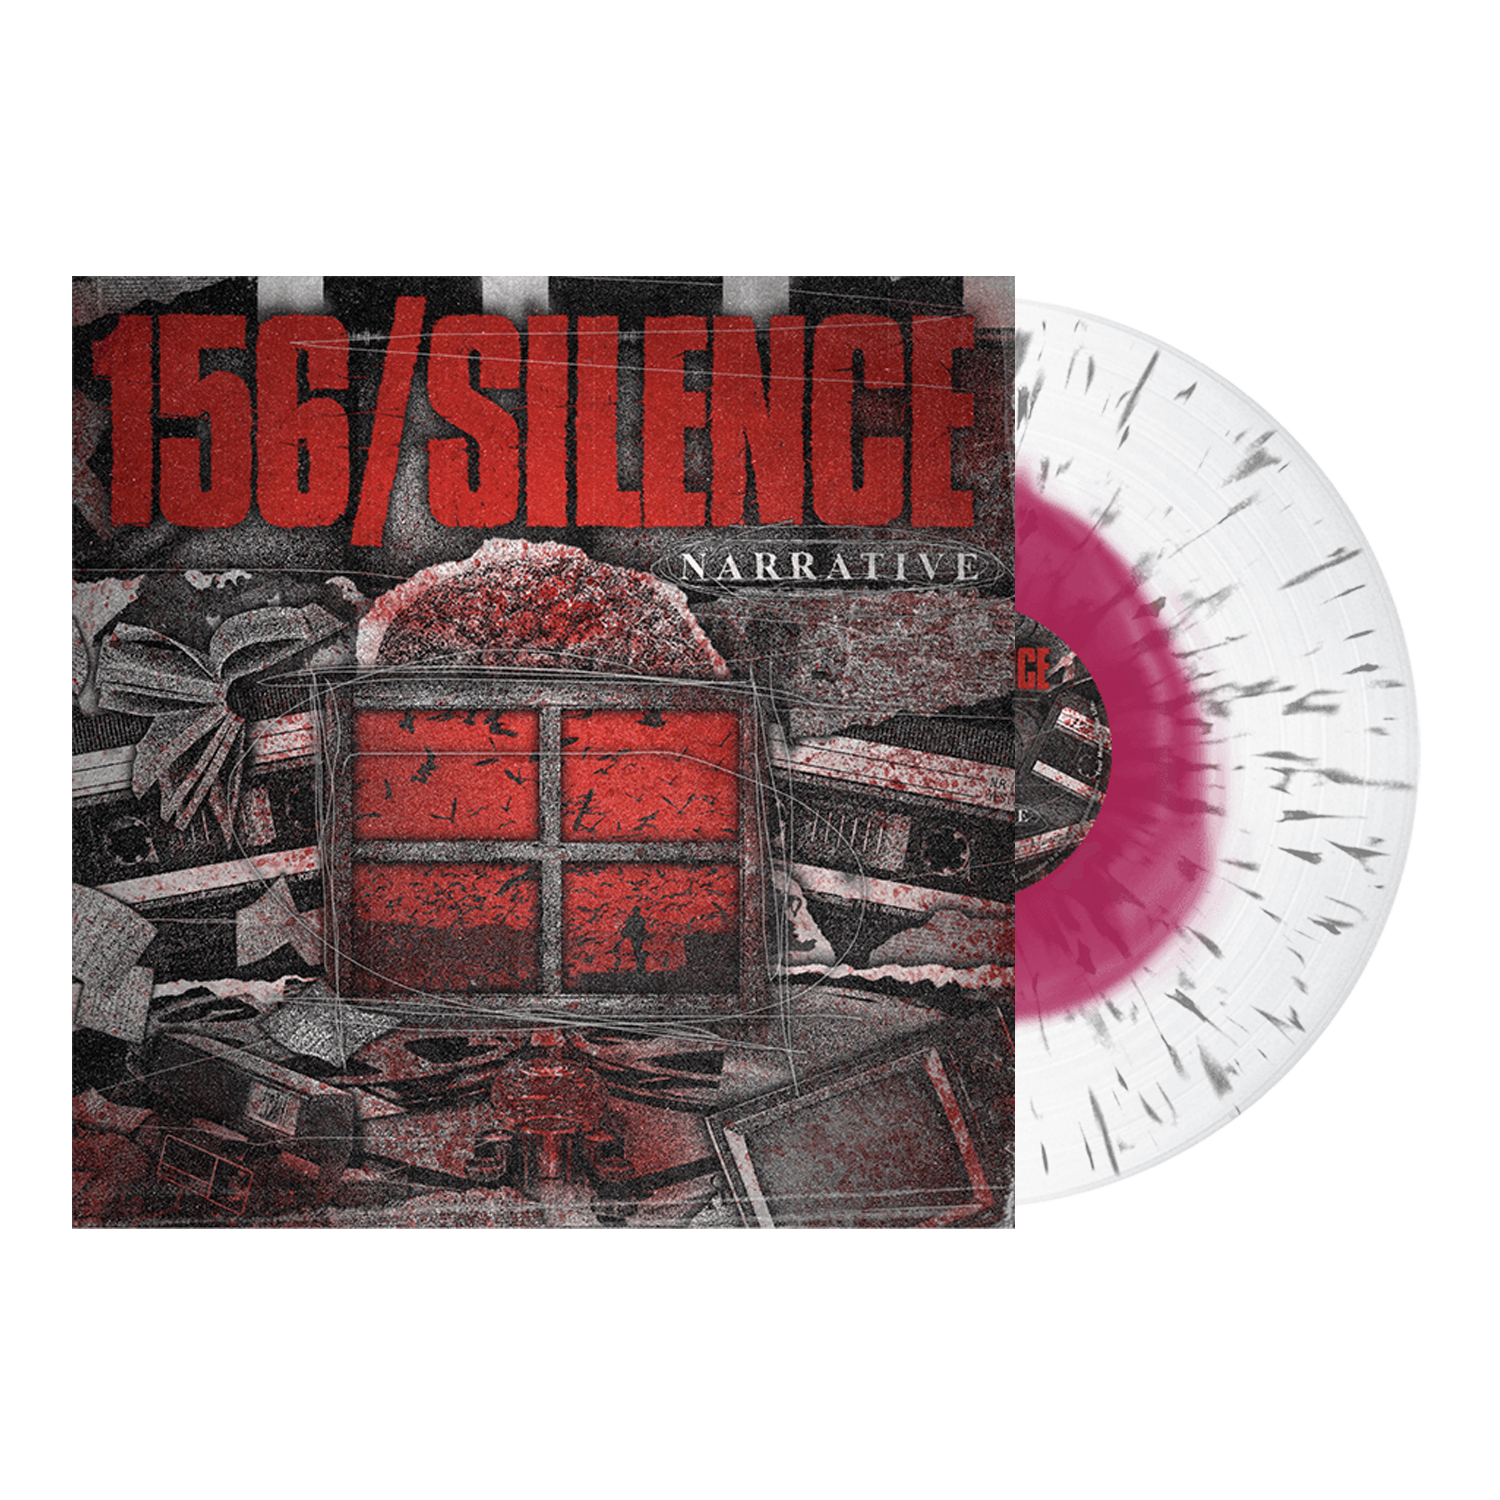 156/Silence - 'Narrative' Magenta in Clear w/ Grey Splatter Vinyl